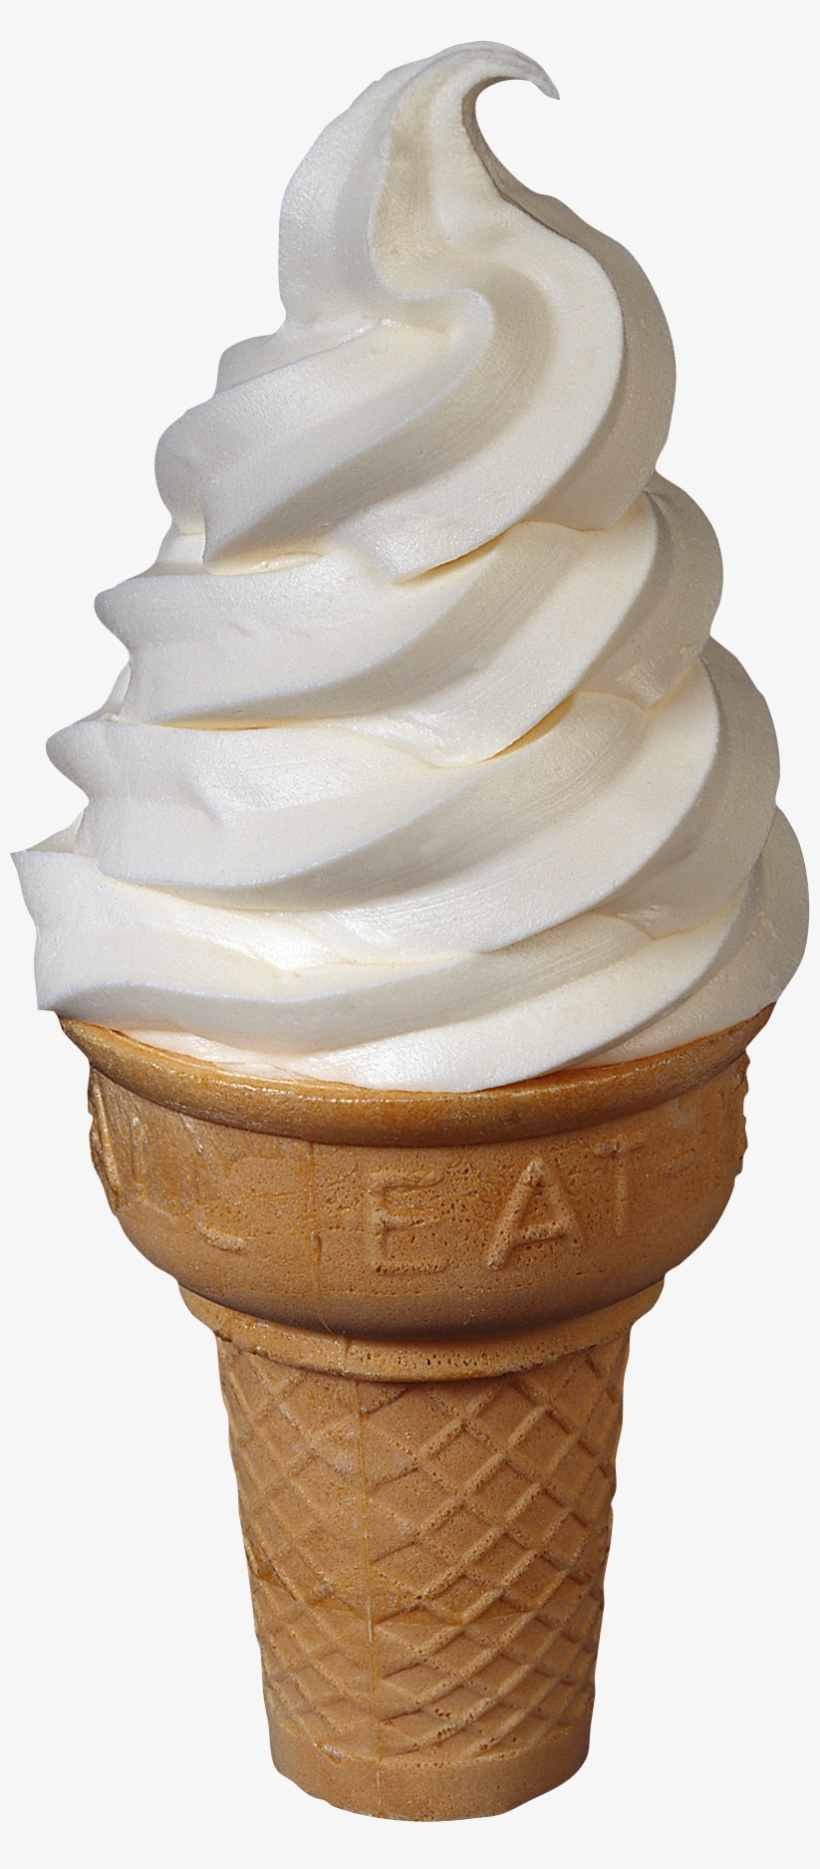 Ice Cream Png Image - Ice Cream Cone Soft Serve, transparent png #301286